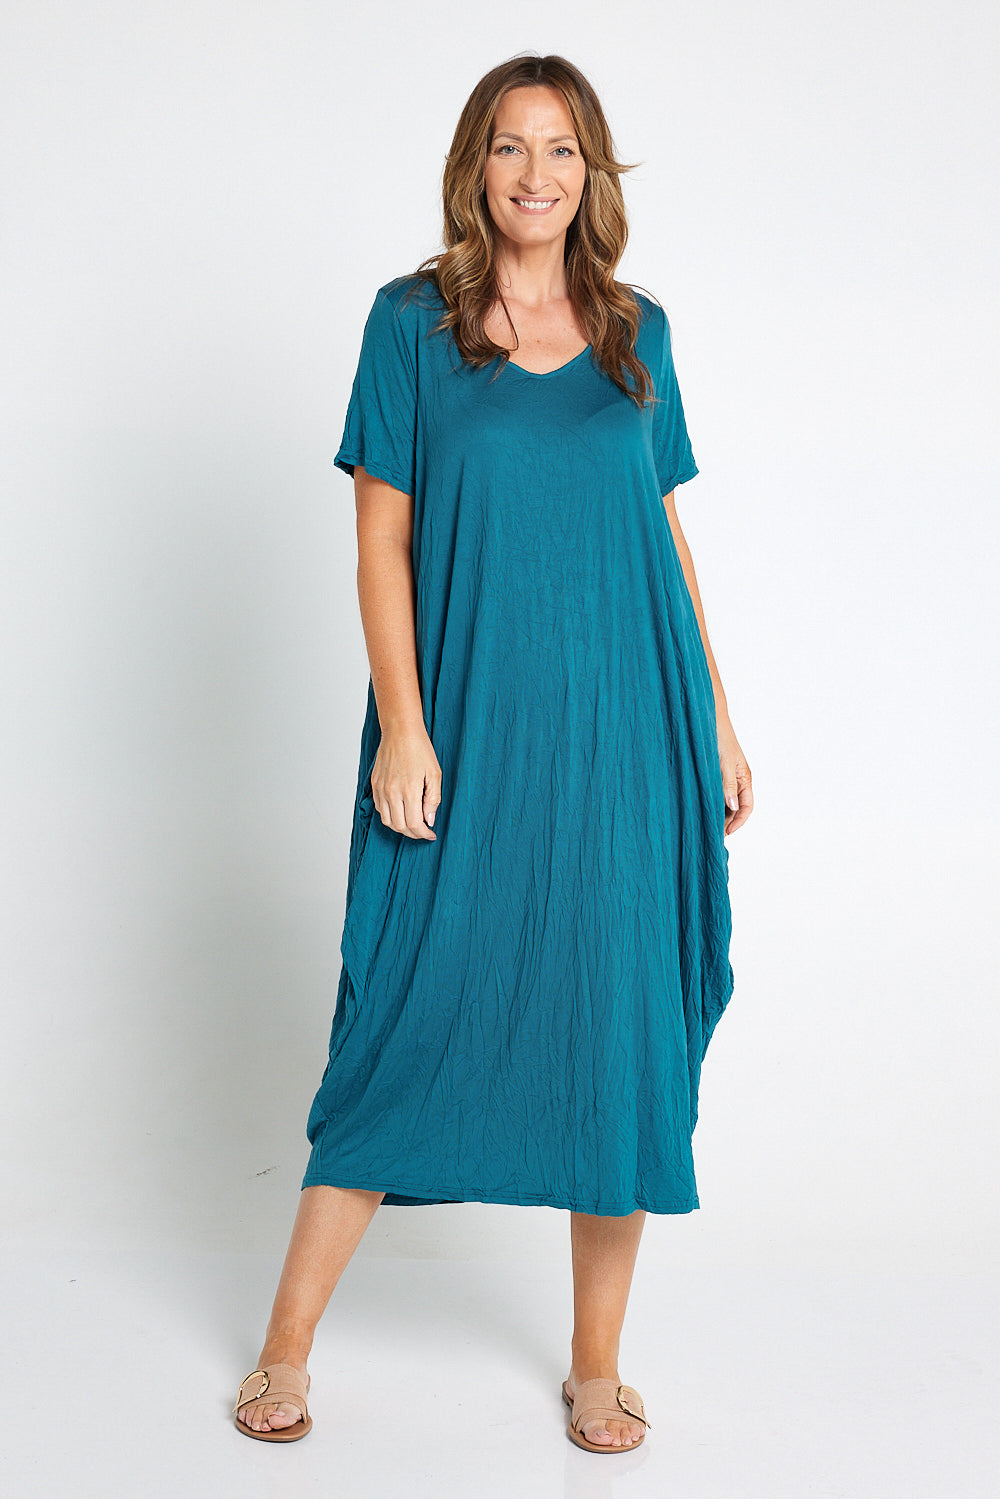 Zoe Dress - Teal | Cotton Village Clothing for Women Online – TULIO Fashion